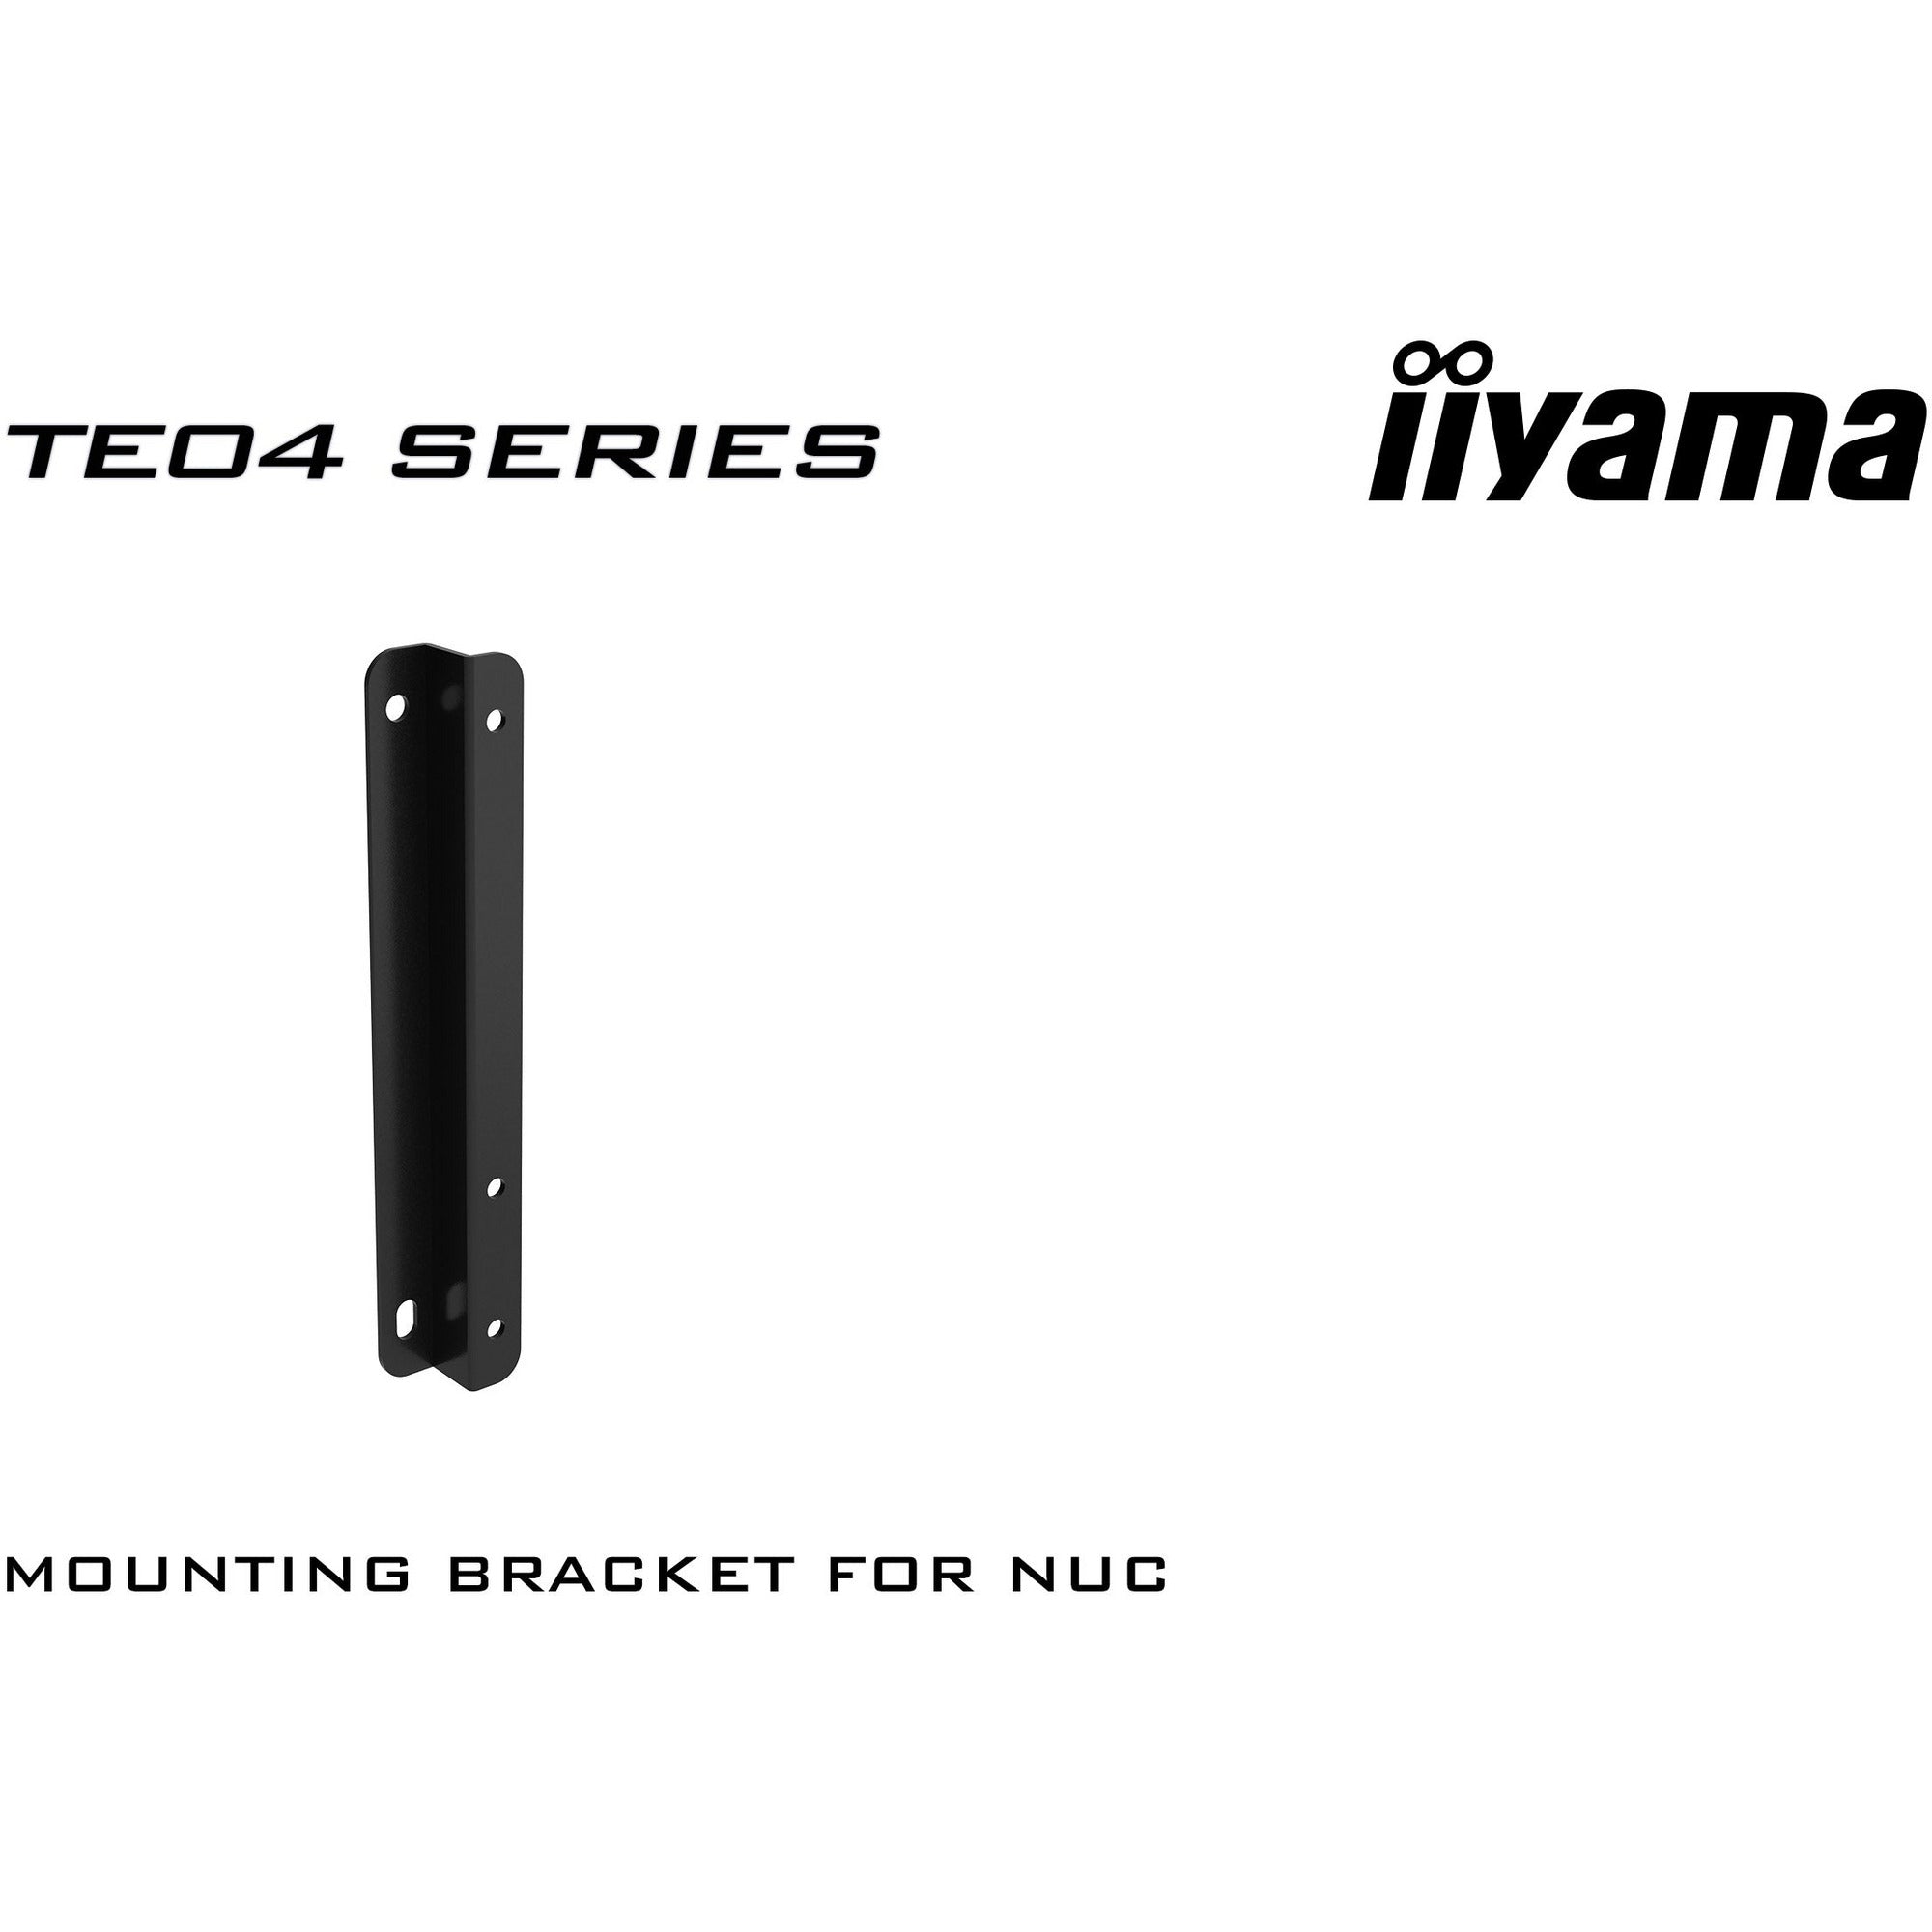 Iiyama ProLite TE9804MIS-B1AG 98’’ Interactive  4K UHD LCD Touchscreen with Integrated Whiteboard Software